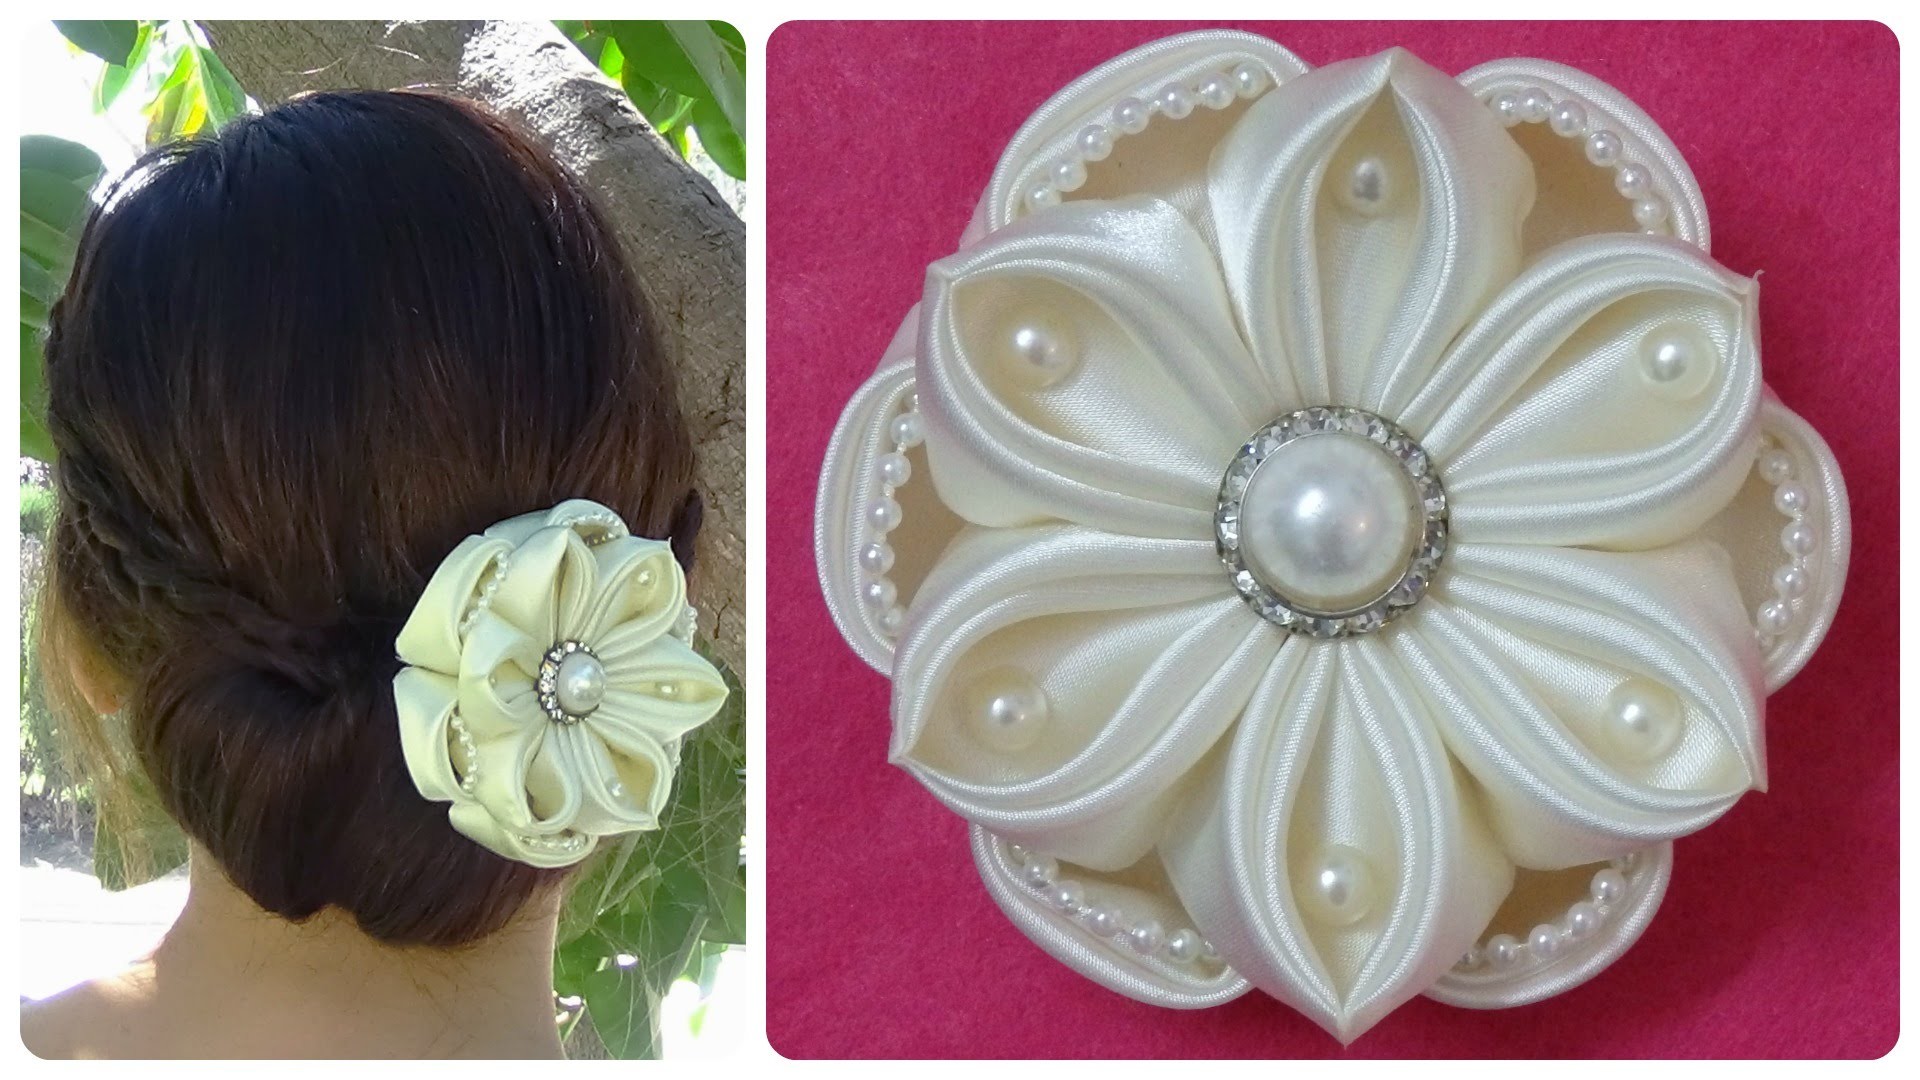 DIY kanzashi satin flower, wedding hair accessoire,kanzashi flower tutorial